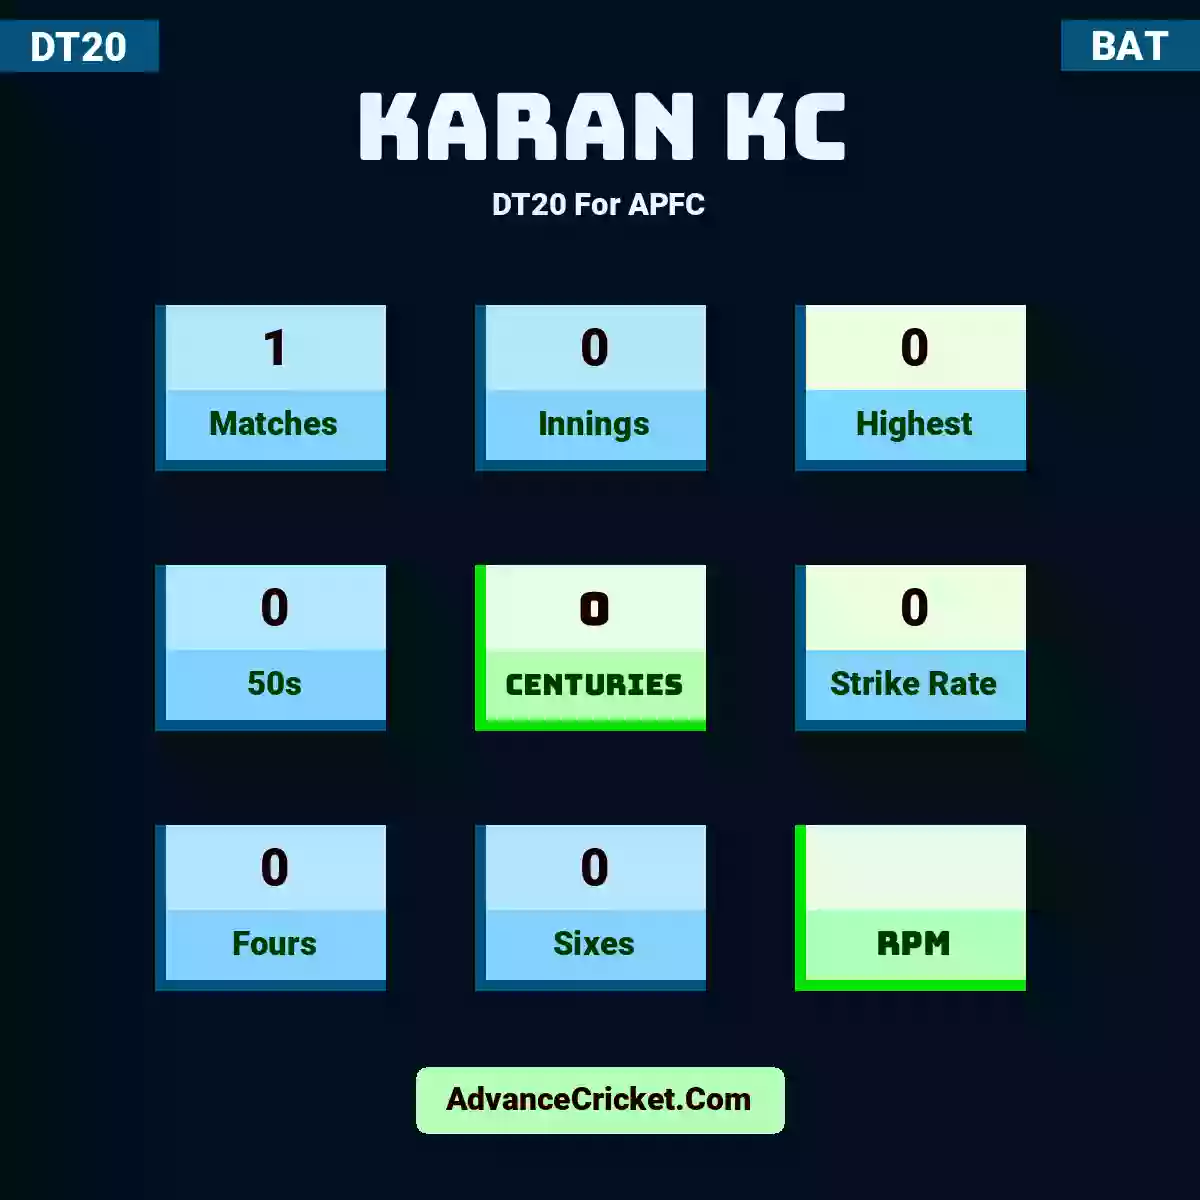 Karan KC DT20  For APFC, Karan KC played 1 matches, scored 0 runs as highest, 0 half-centuries, and 0 centuries, with a strike rate of 0. K.KC hit 0 fours and 0 sixes.